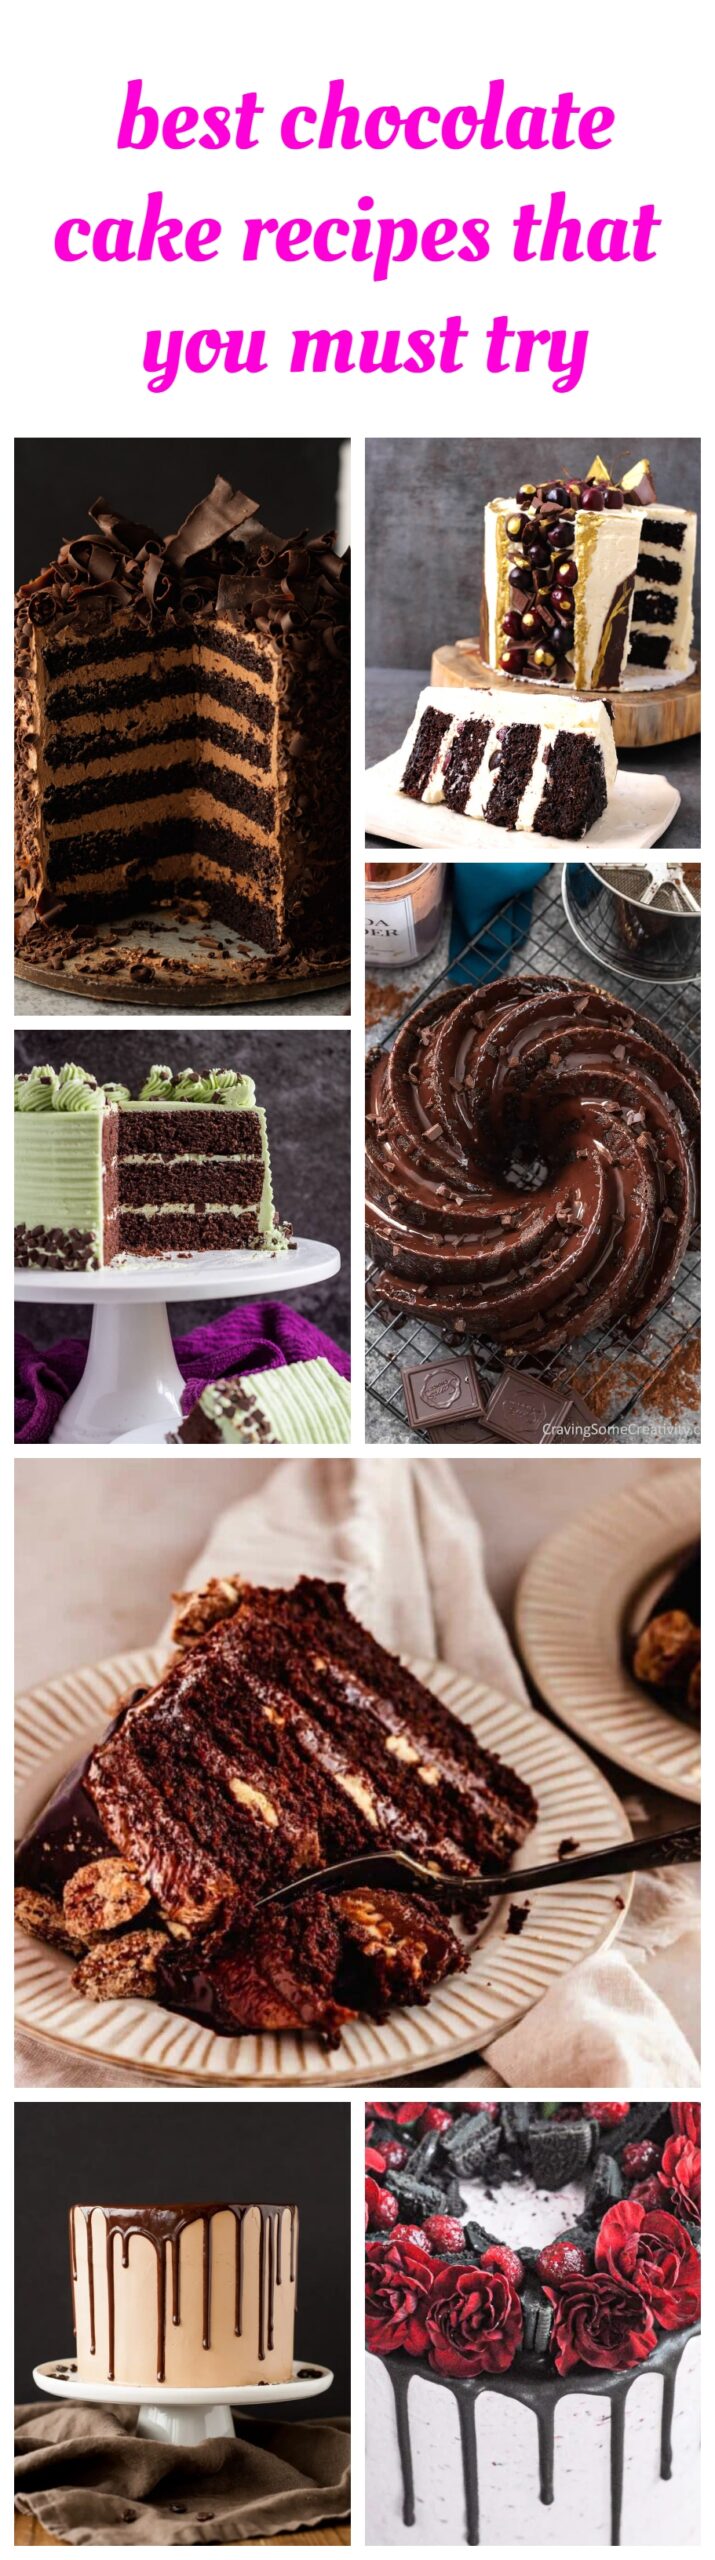 best chocolate cake recipes ever